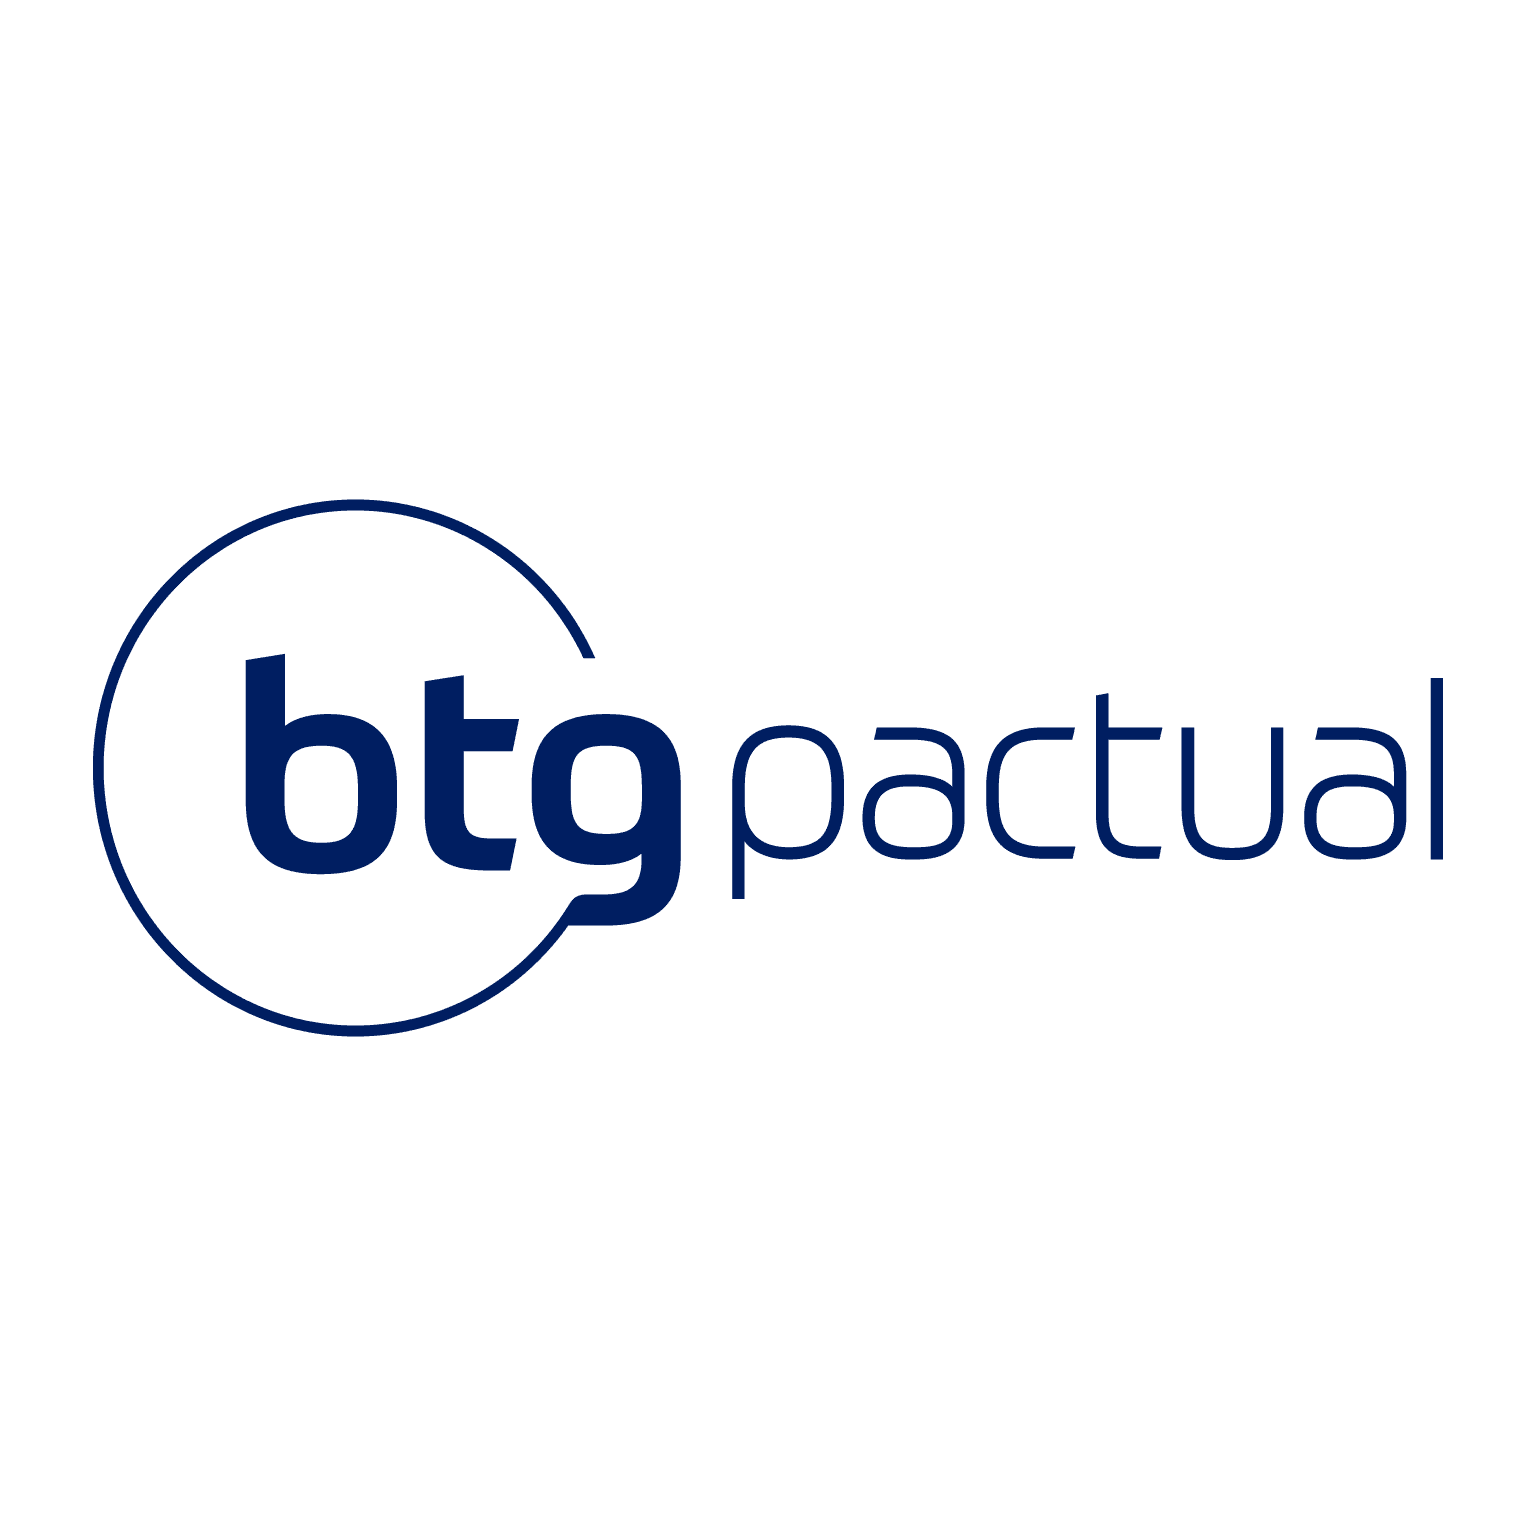 vector btg pactual